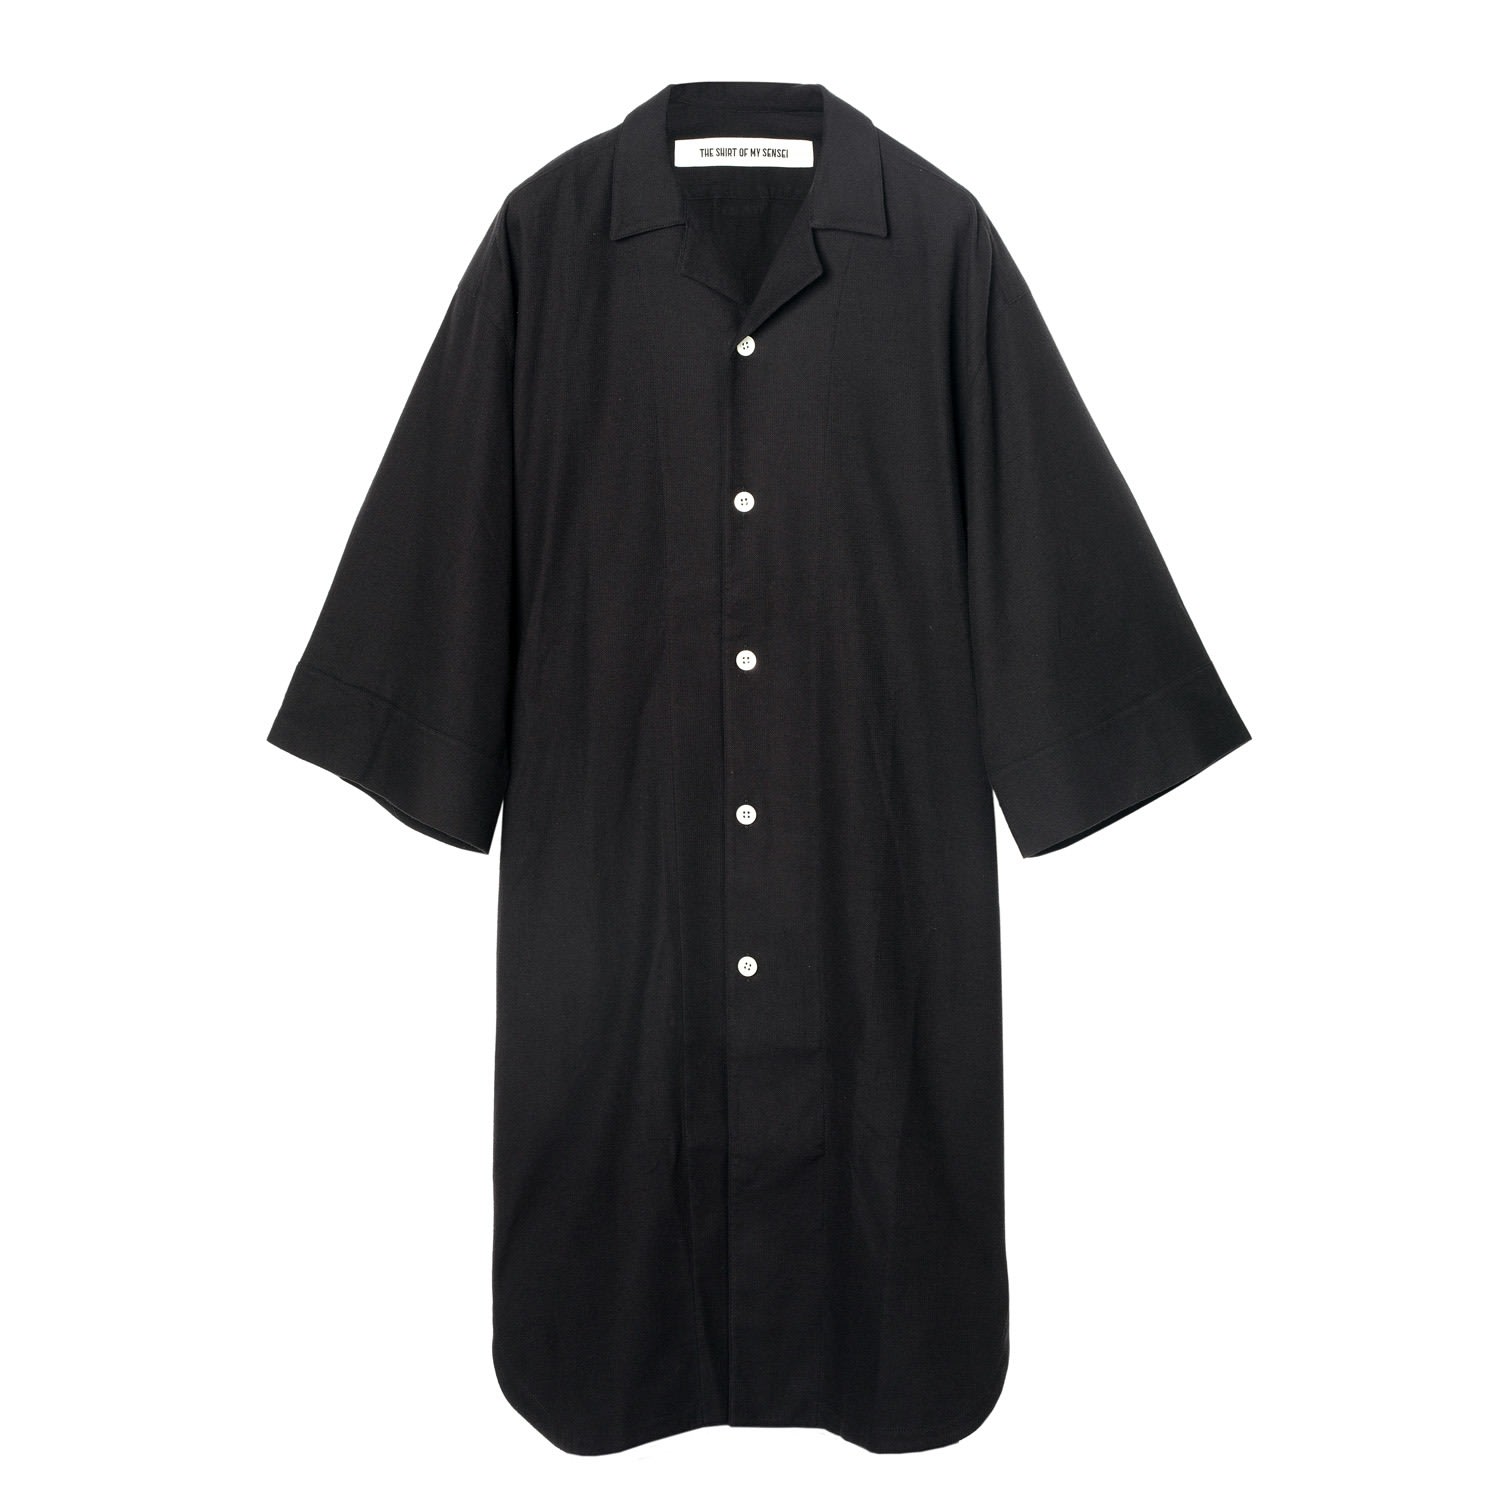 Men's Yukata Shirt - Black THE SHIRT OF MY SENSEI